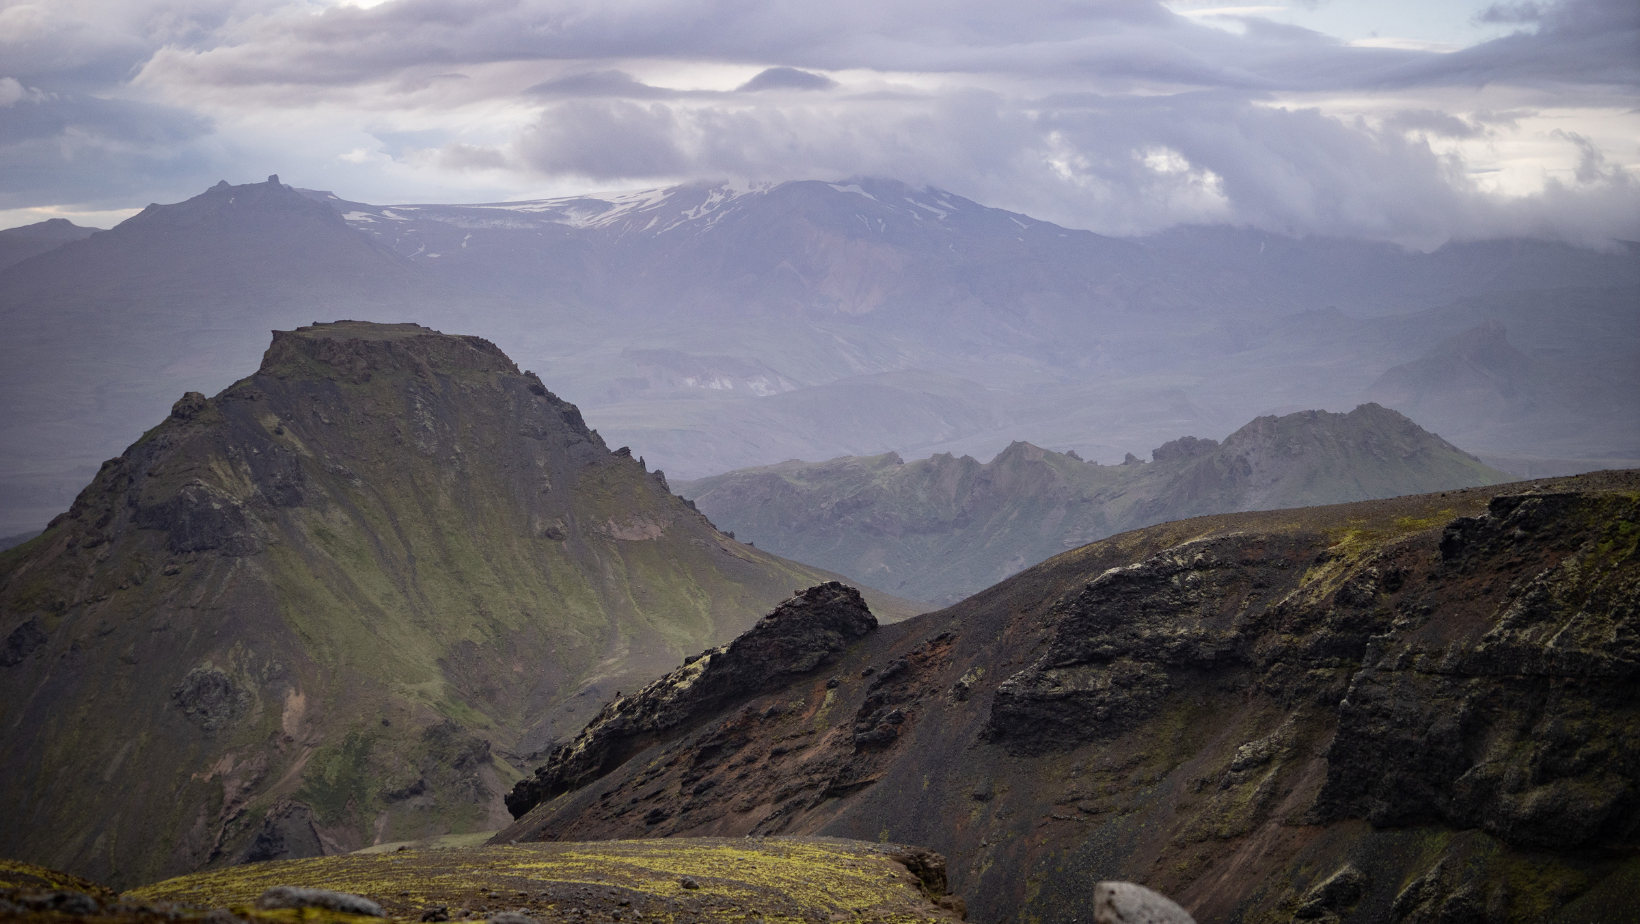 Views of the epic mountain range surrounding Þórsmörk